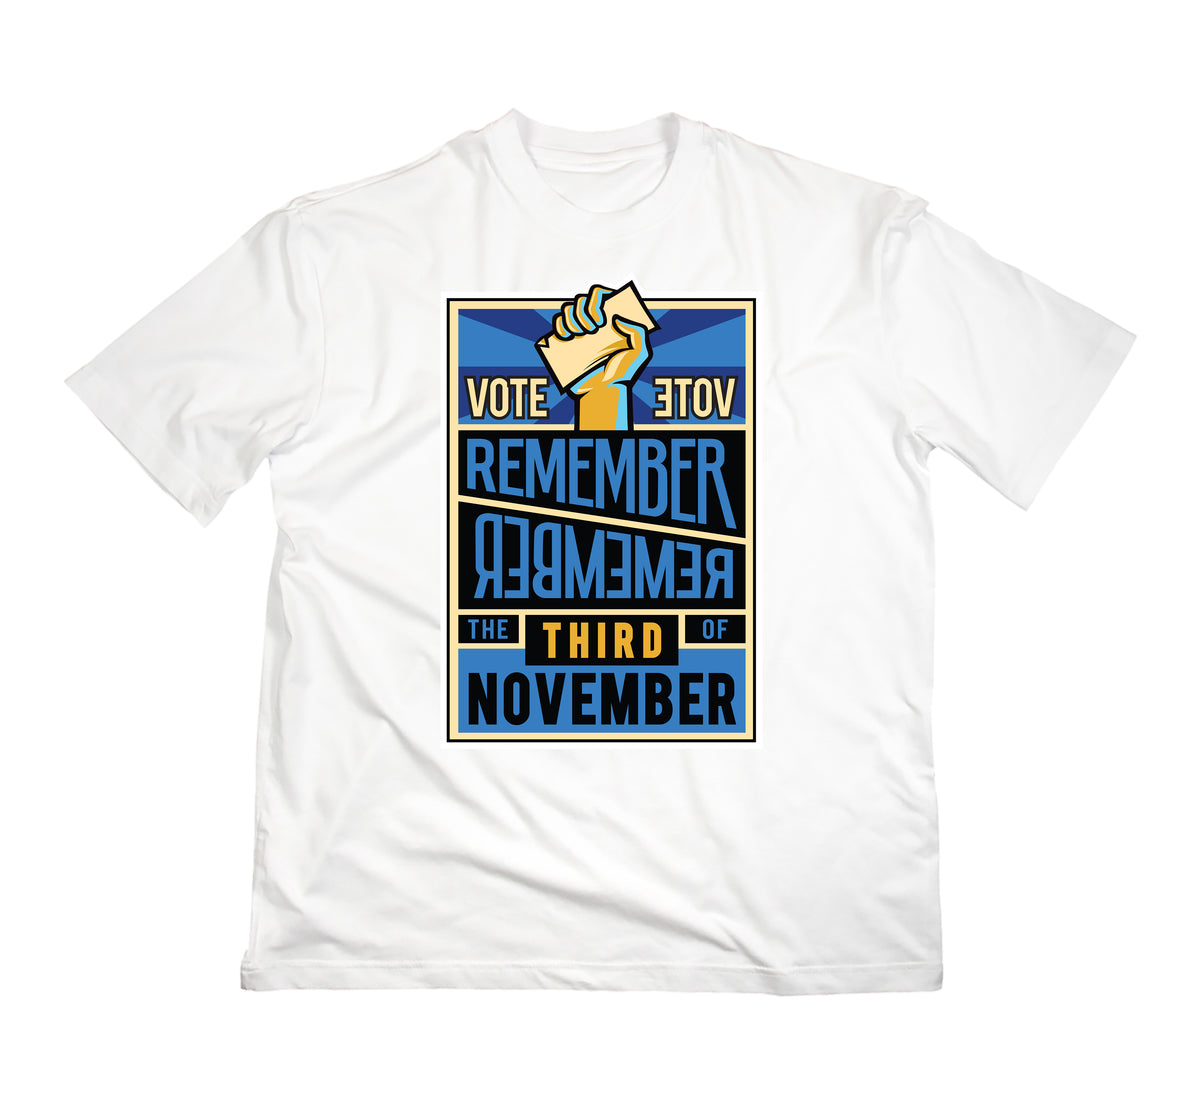 Remember, Remember! T-Shirt